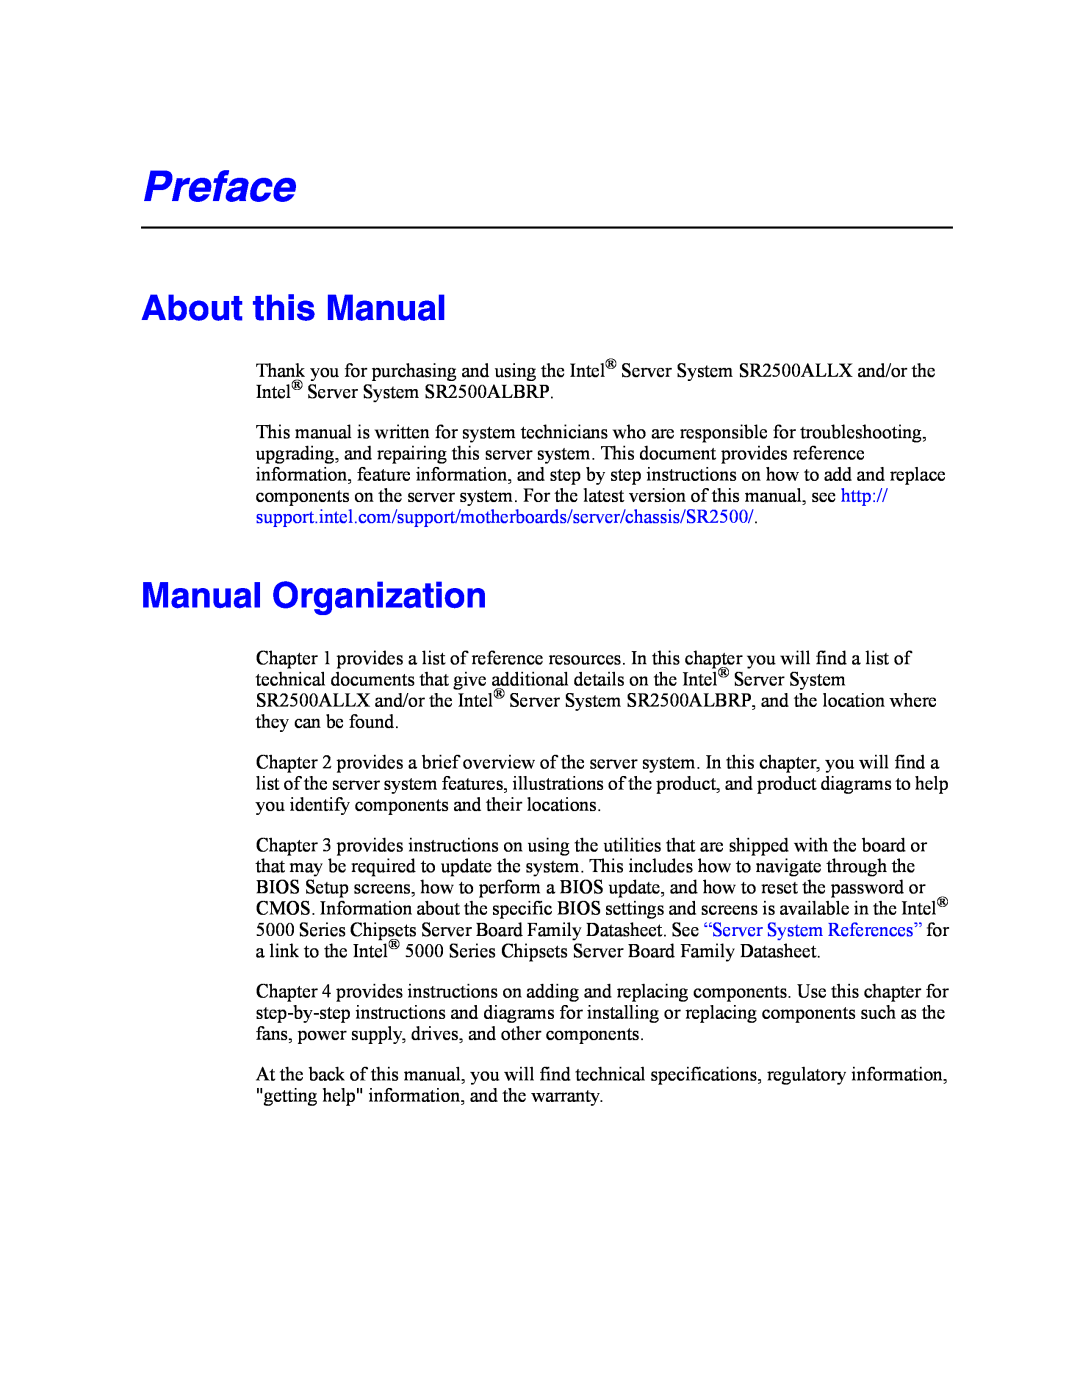 Intel SR2500AL manual Preface, About this Manual, Manual Organization 